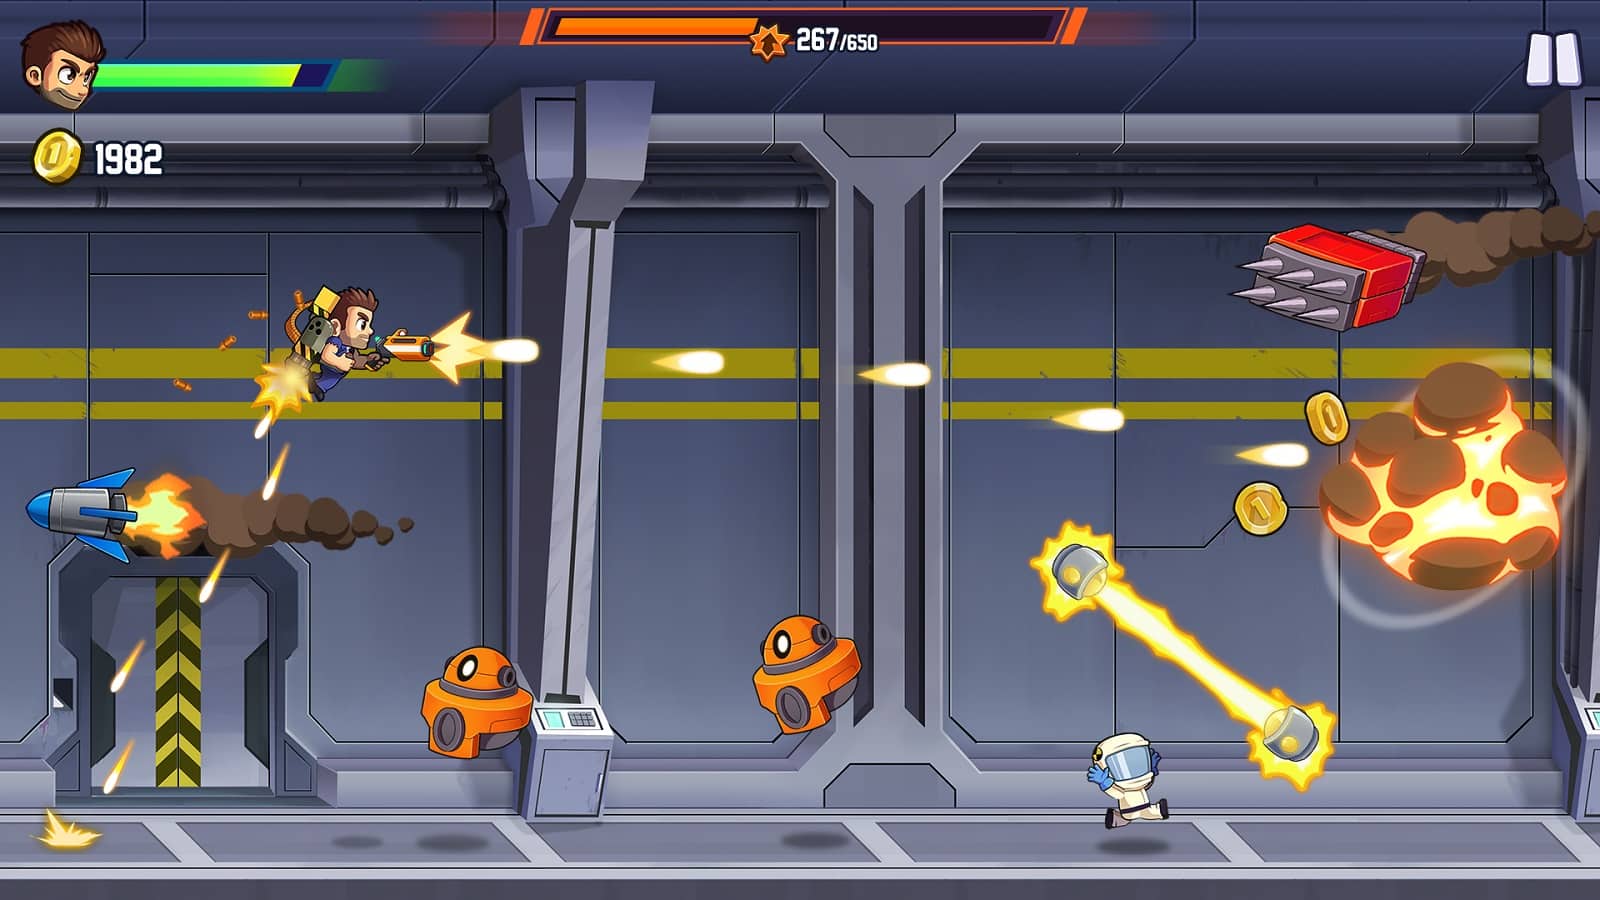 in-game screenshot from jetpack joyride 2